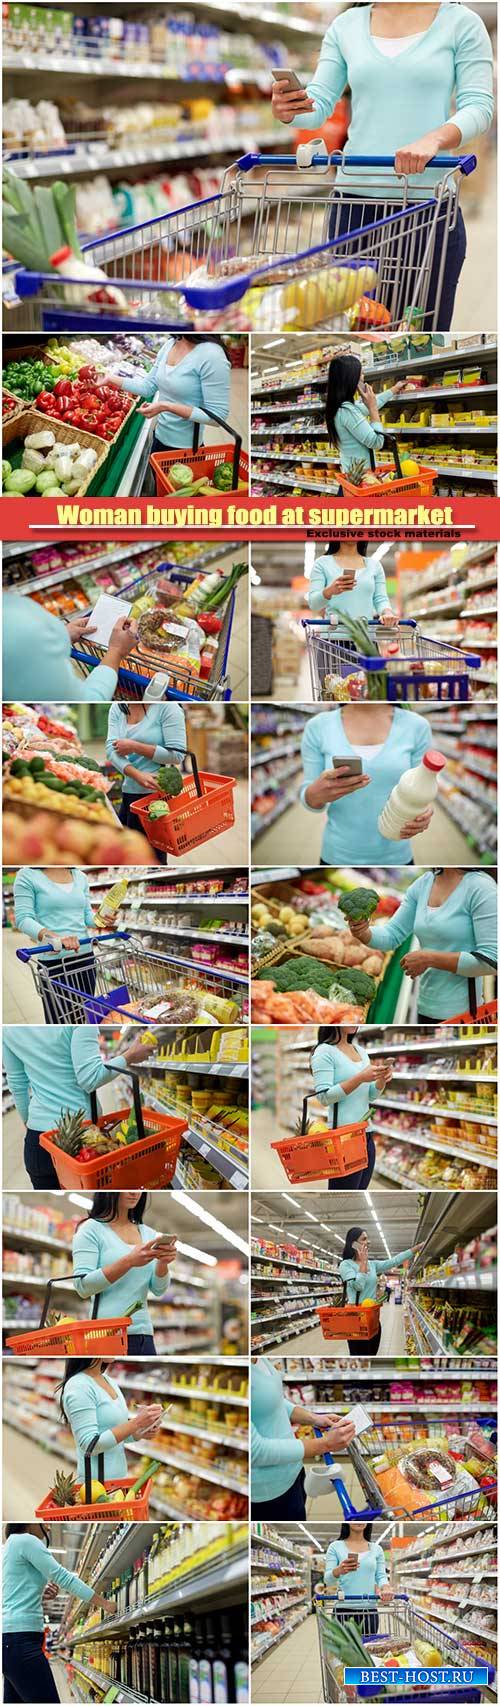 Woman buying food at supermarket